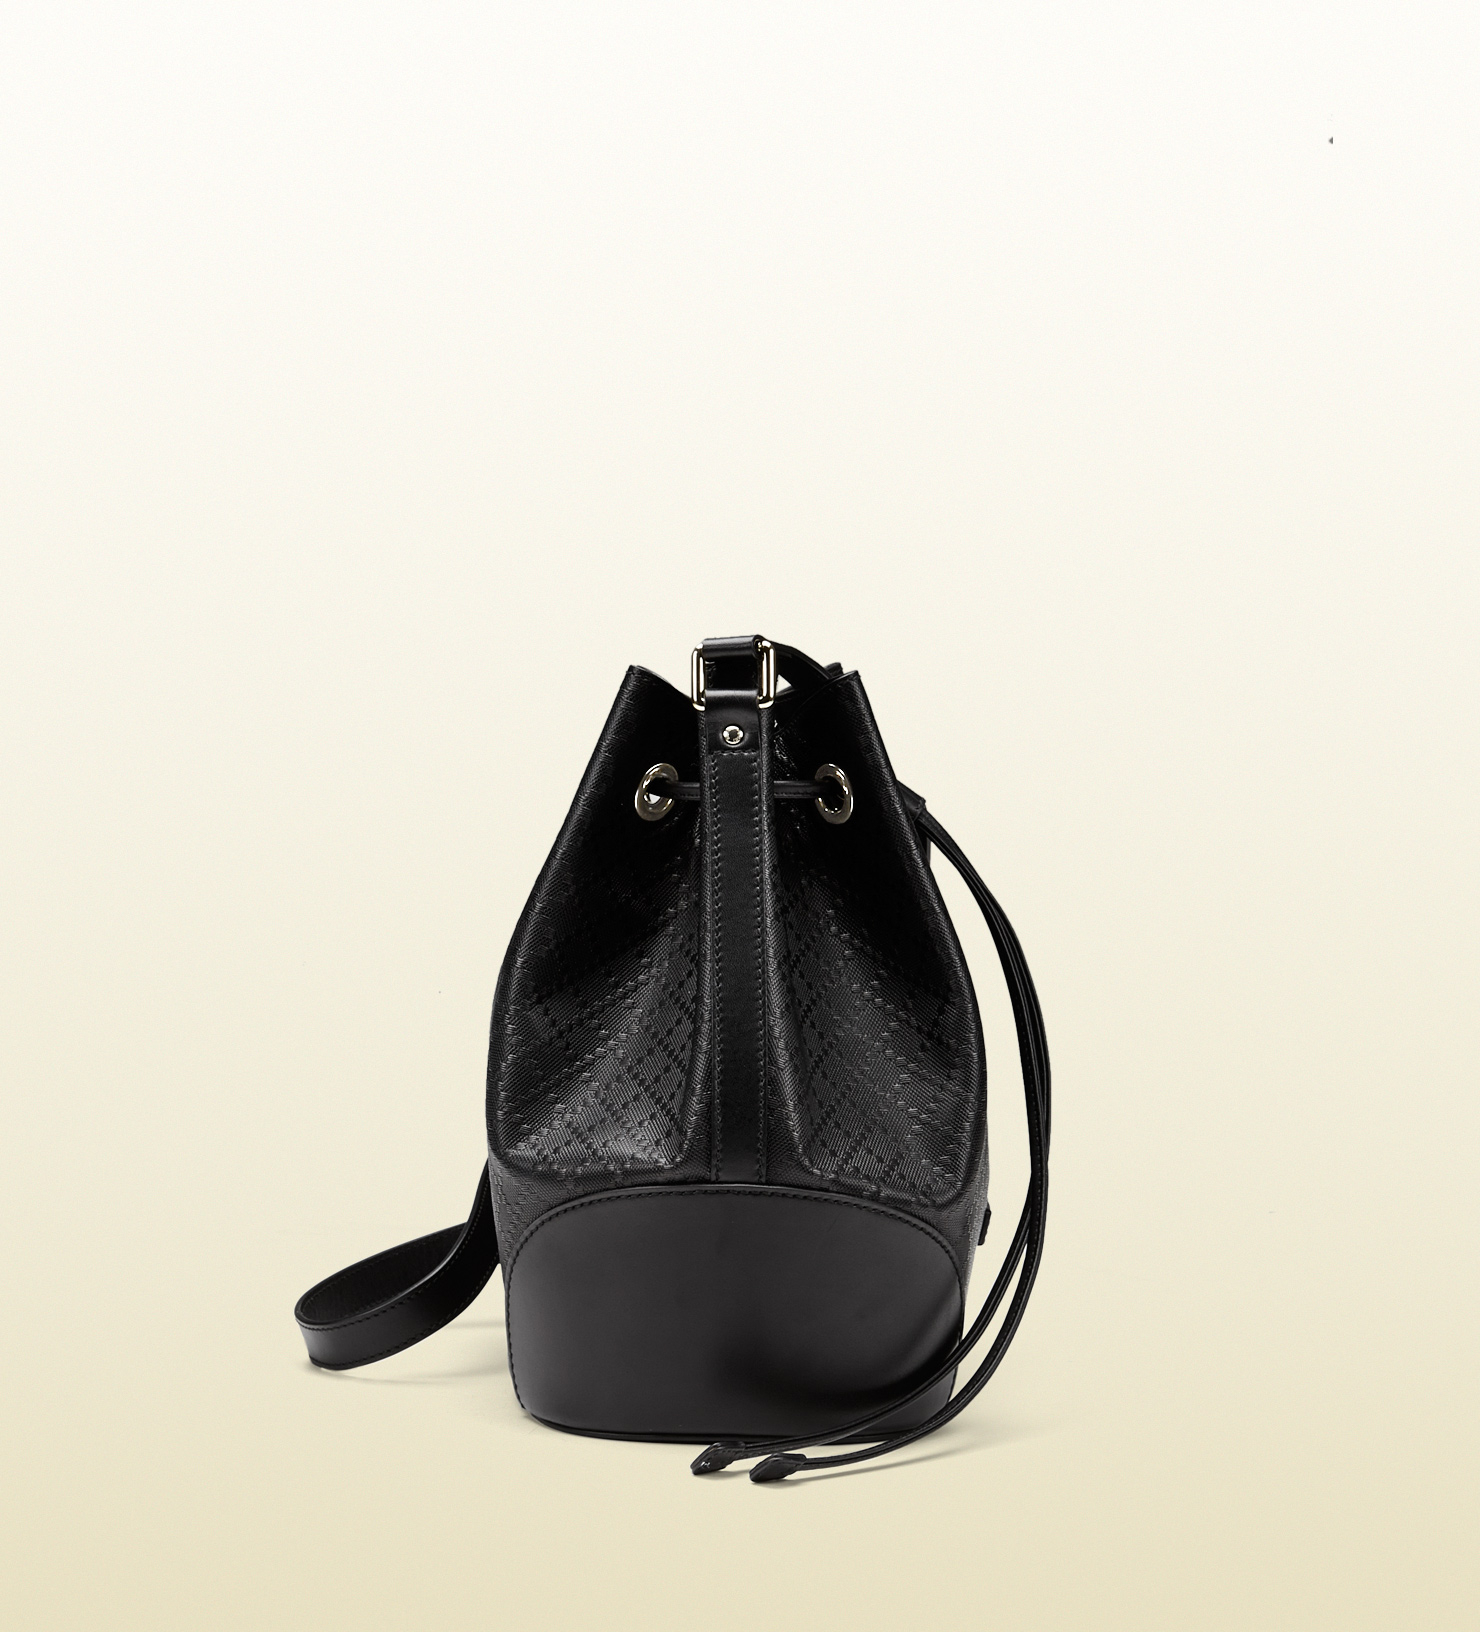 Lyst - Gucci Bright Diamante Leather Bucket Bag in Black